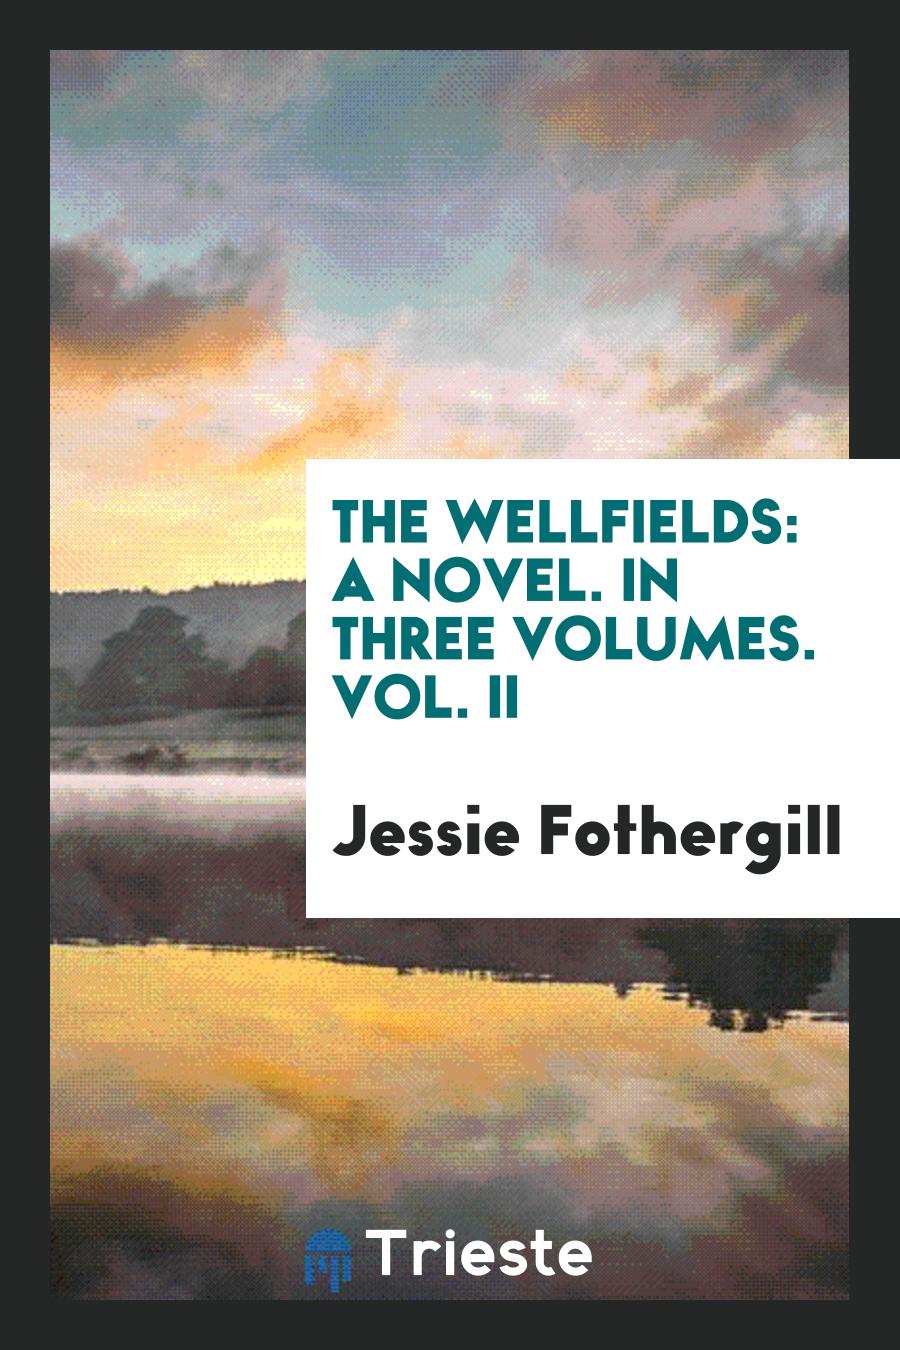 The Wellfields: A Novel. In Three Volumes. Vol. II